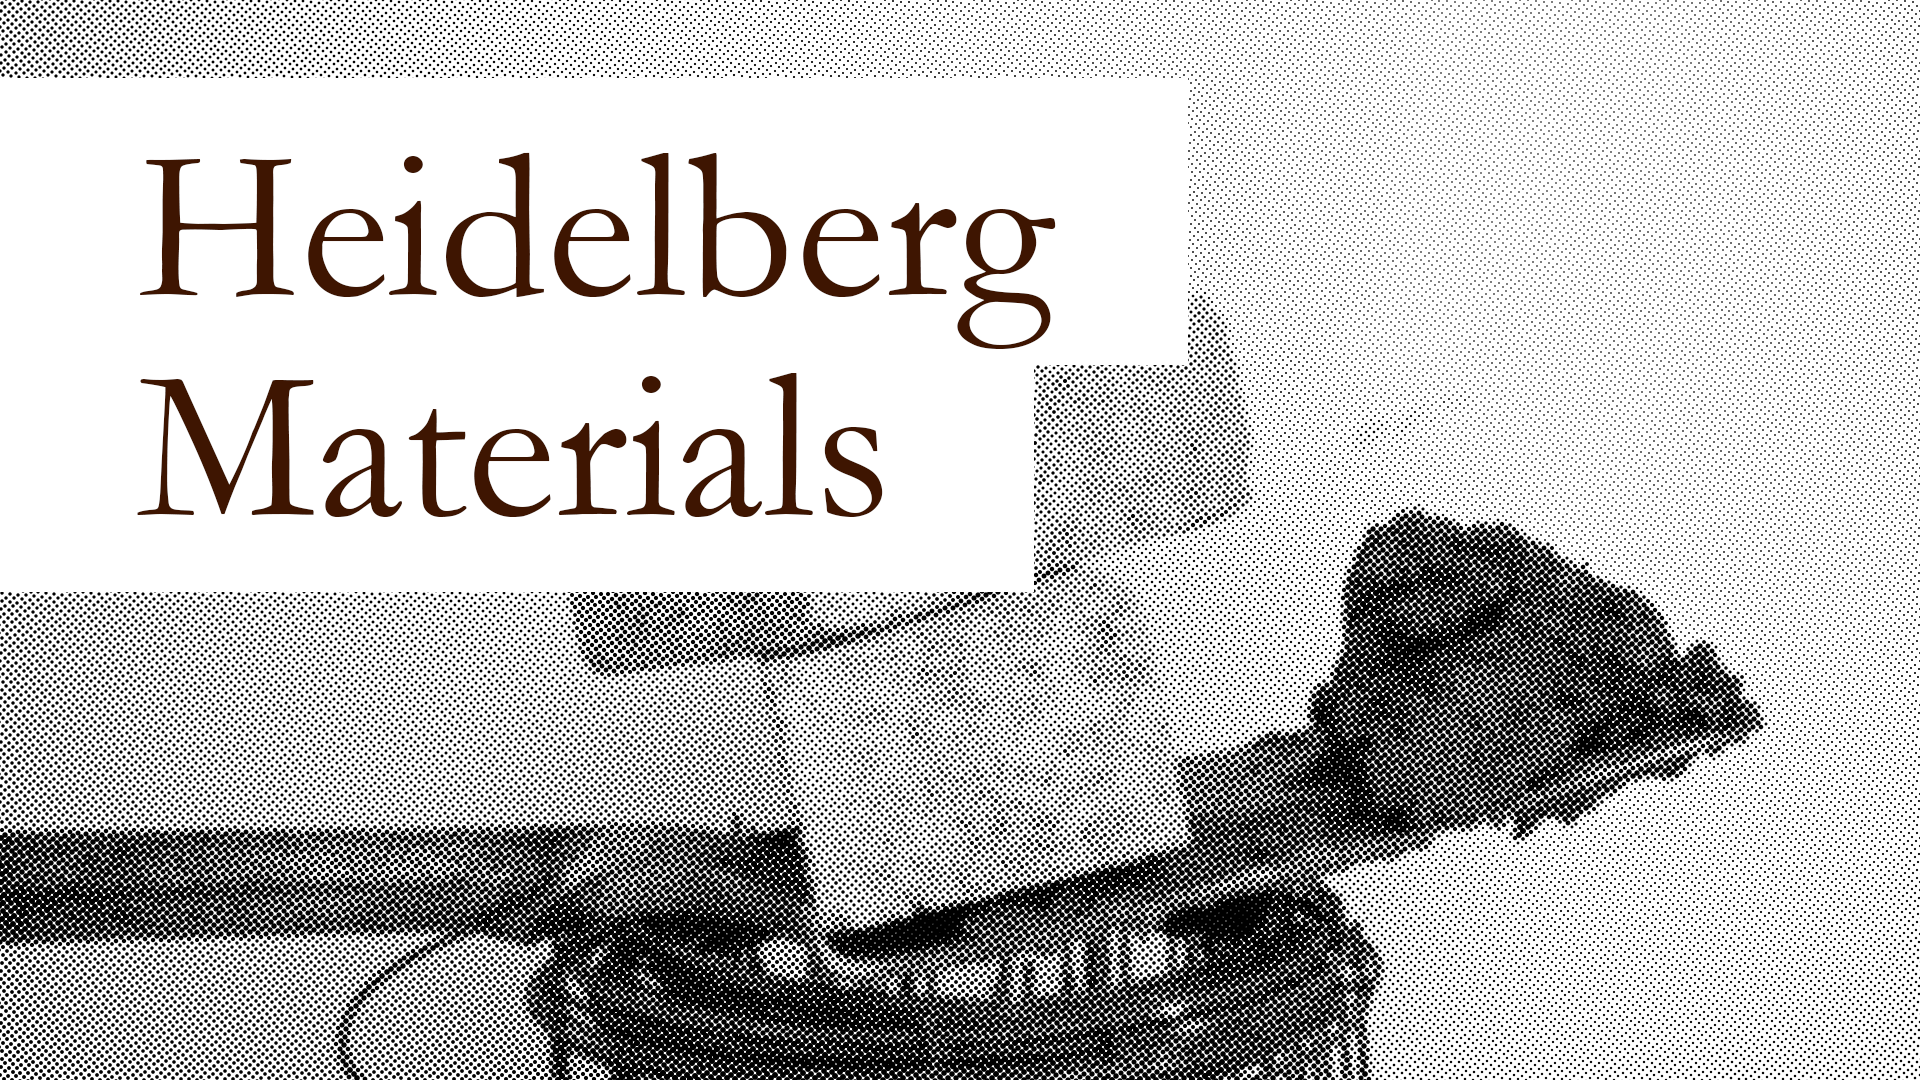 Deutsche Industrie: Heidelberg Materials